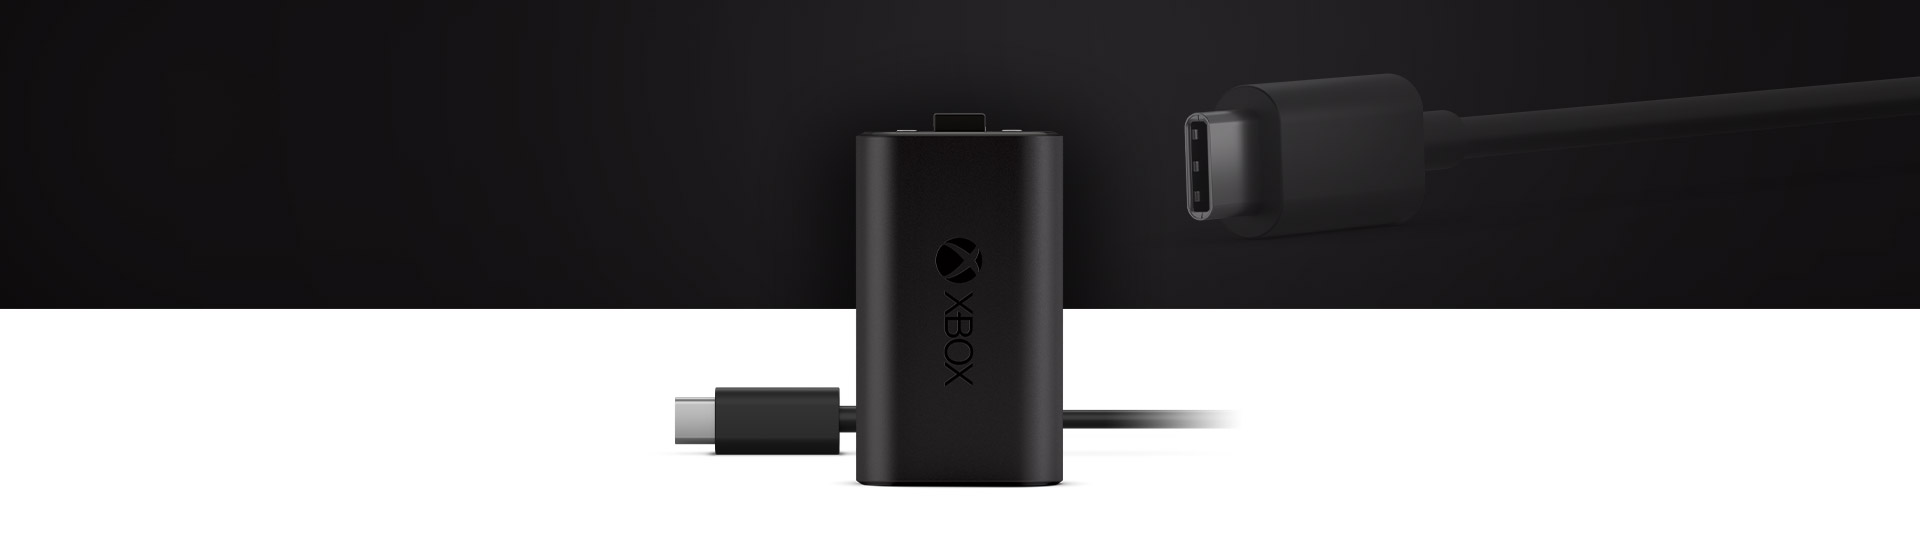 Xboxin ladattava akku ja USB-C®-kaapeli sekä lähikuva USB-C®-kaapelista